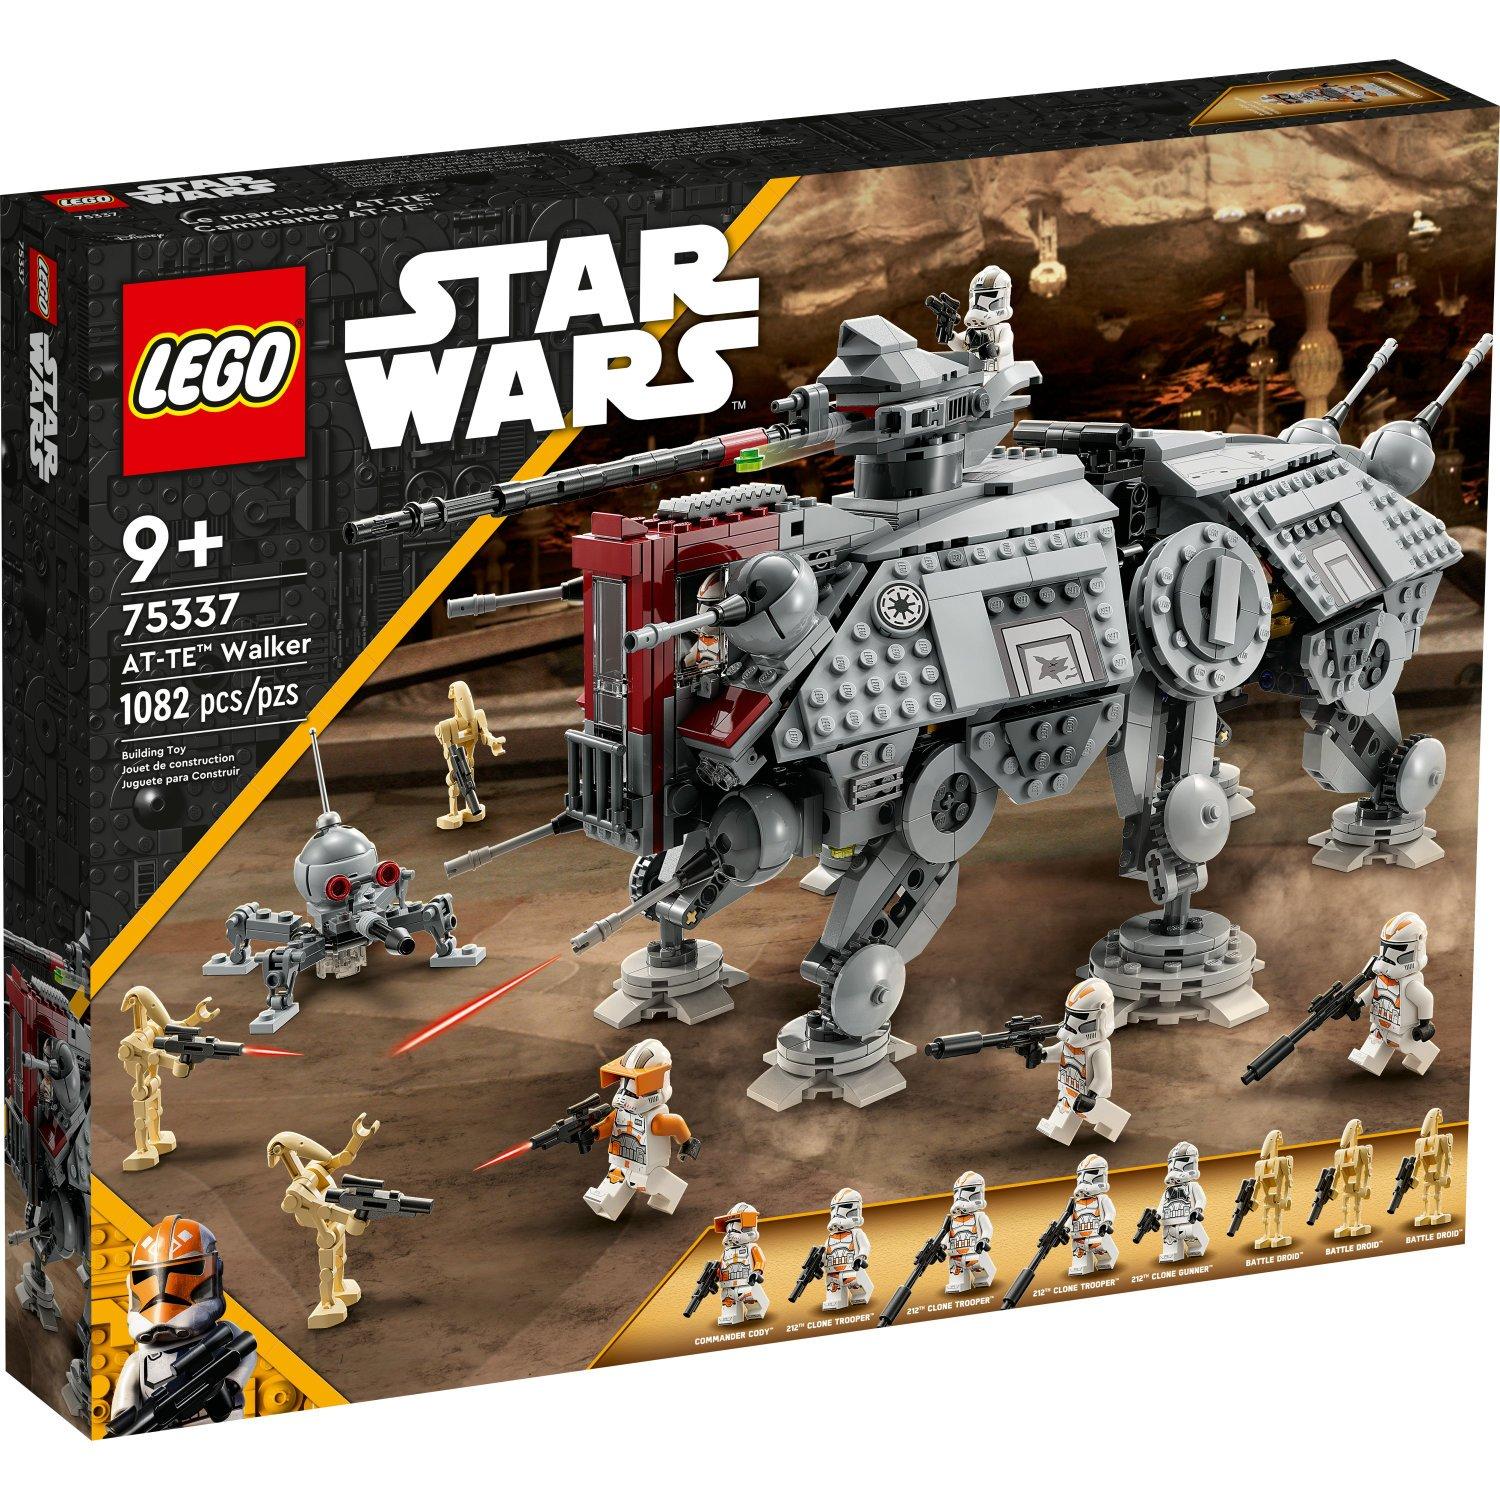 LEGO Star Wars AT-TE Walker 75337 Building Kit